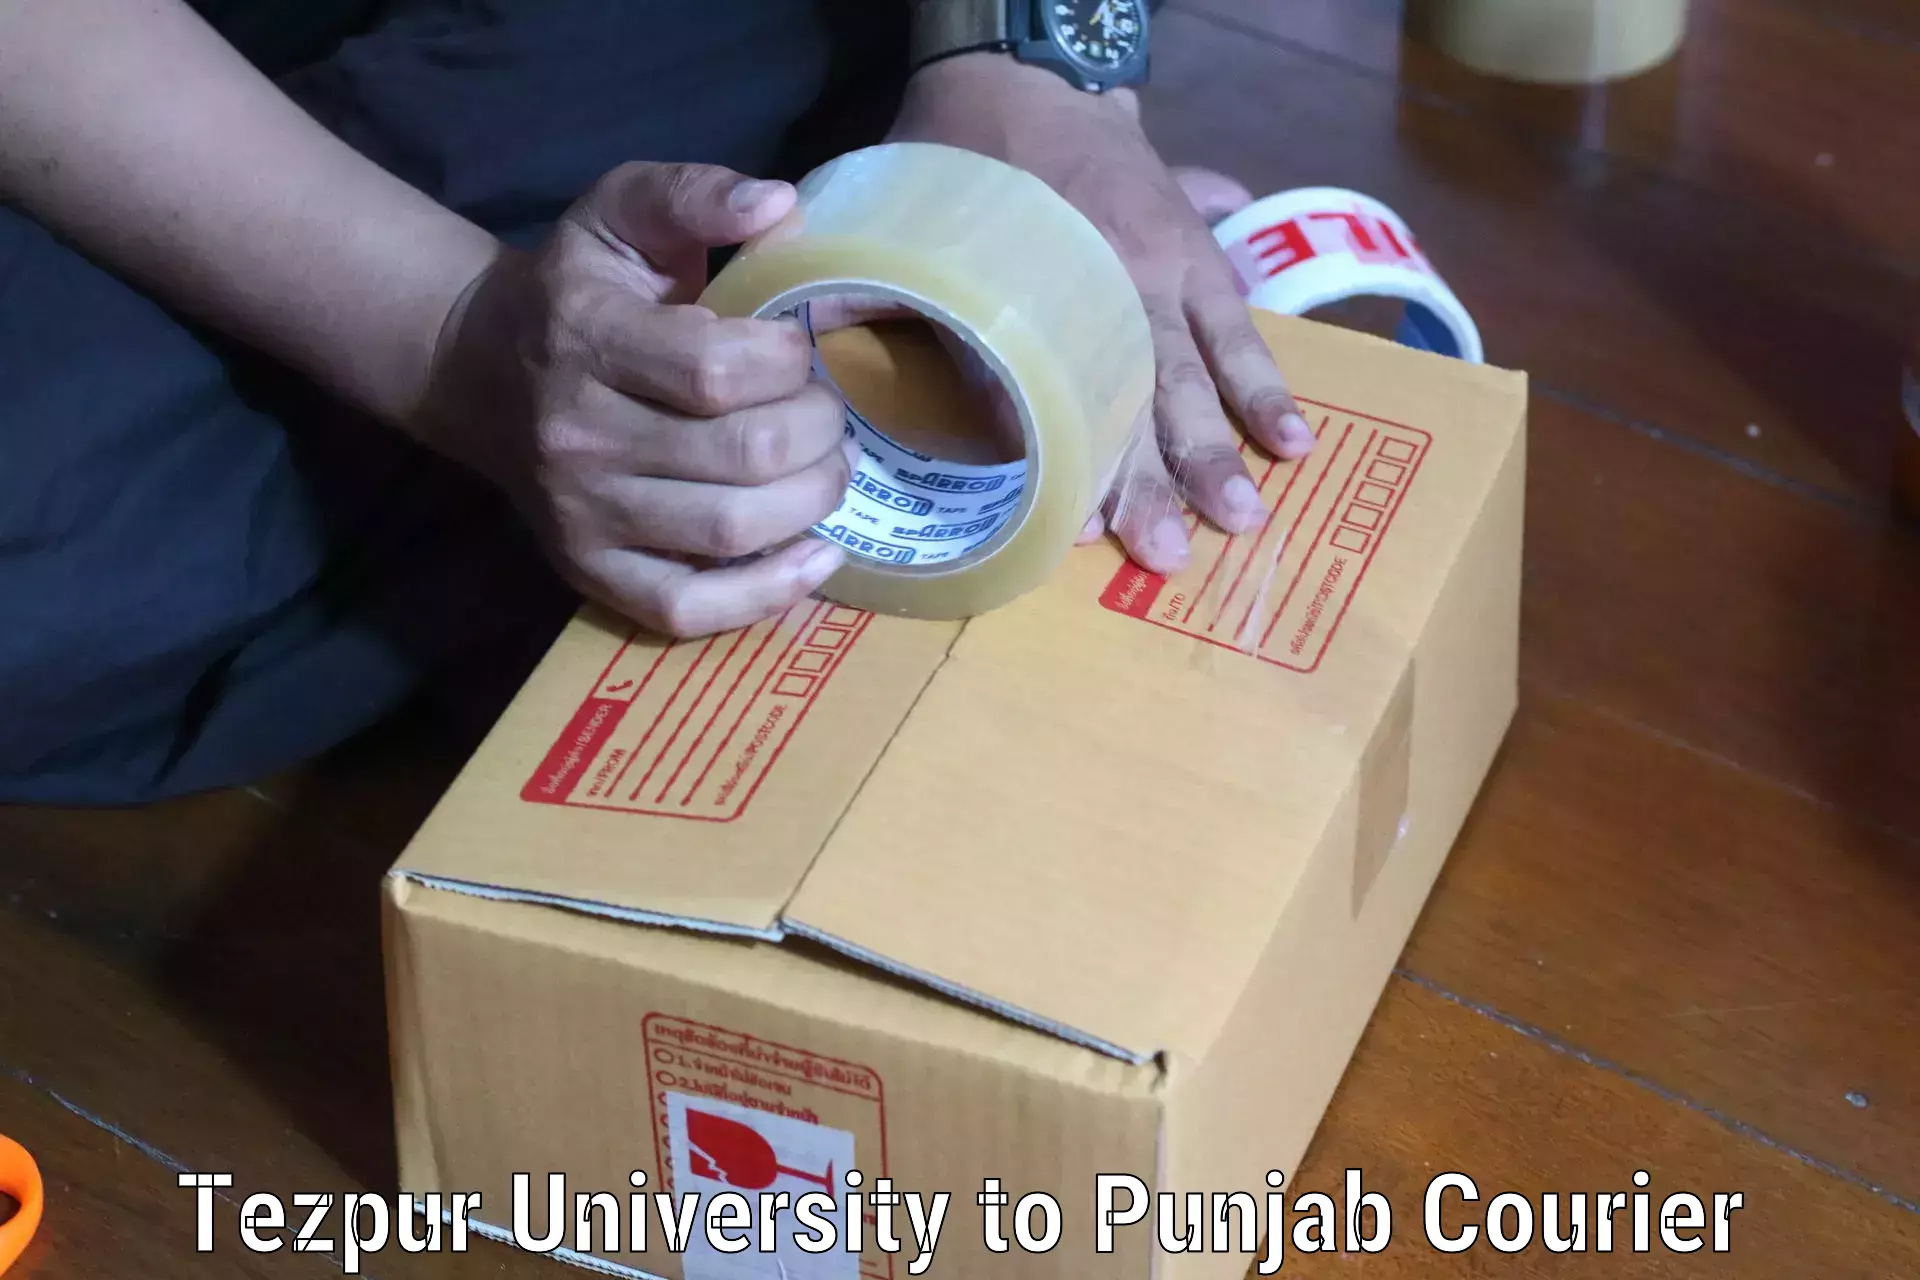 Doorstep delivery service Tezpur University to Punjab